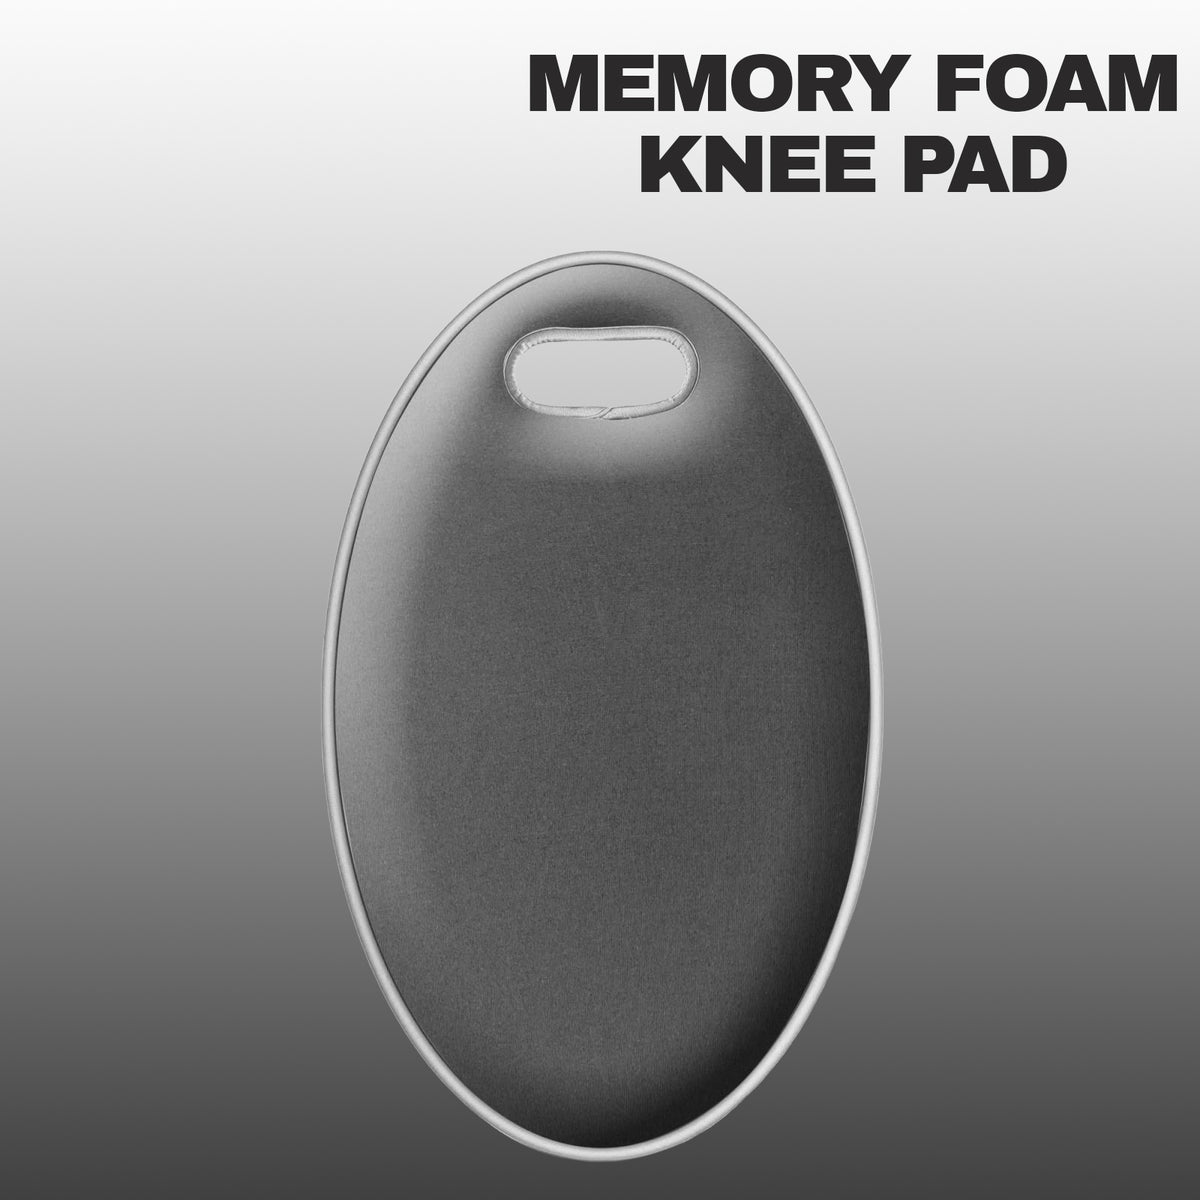 Portable knee pad